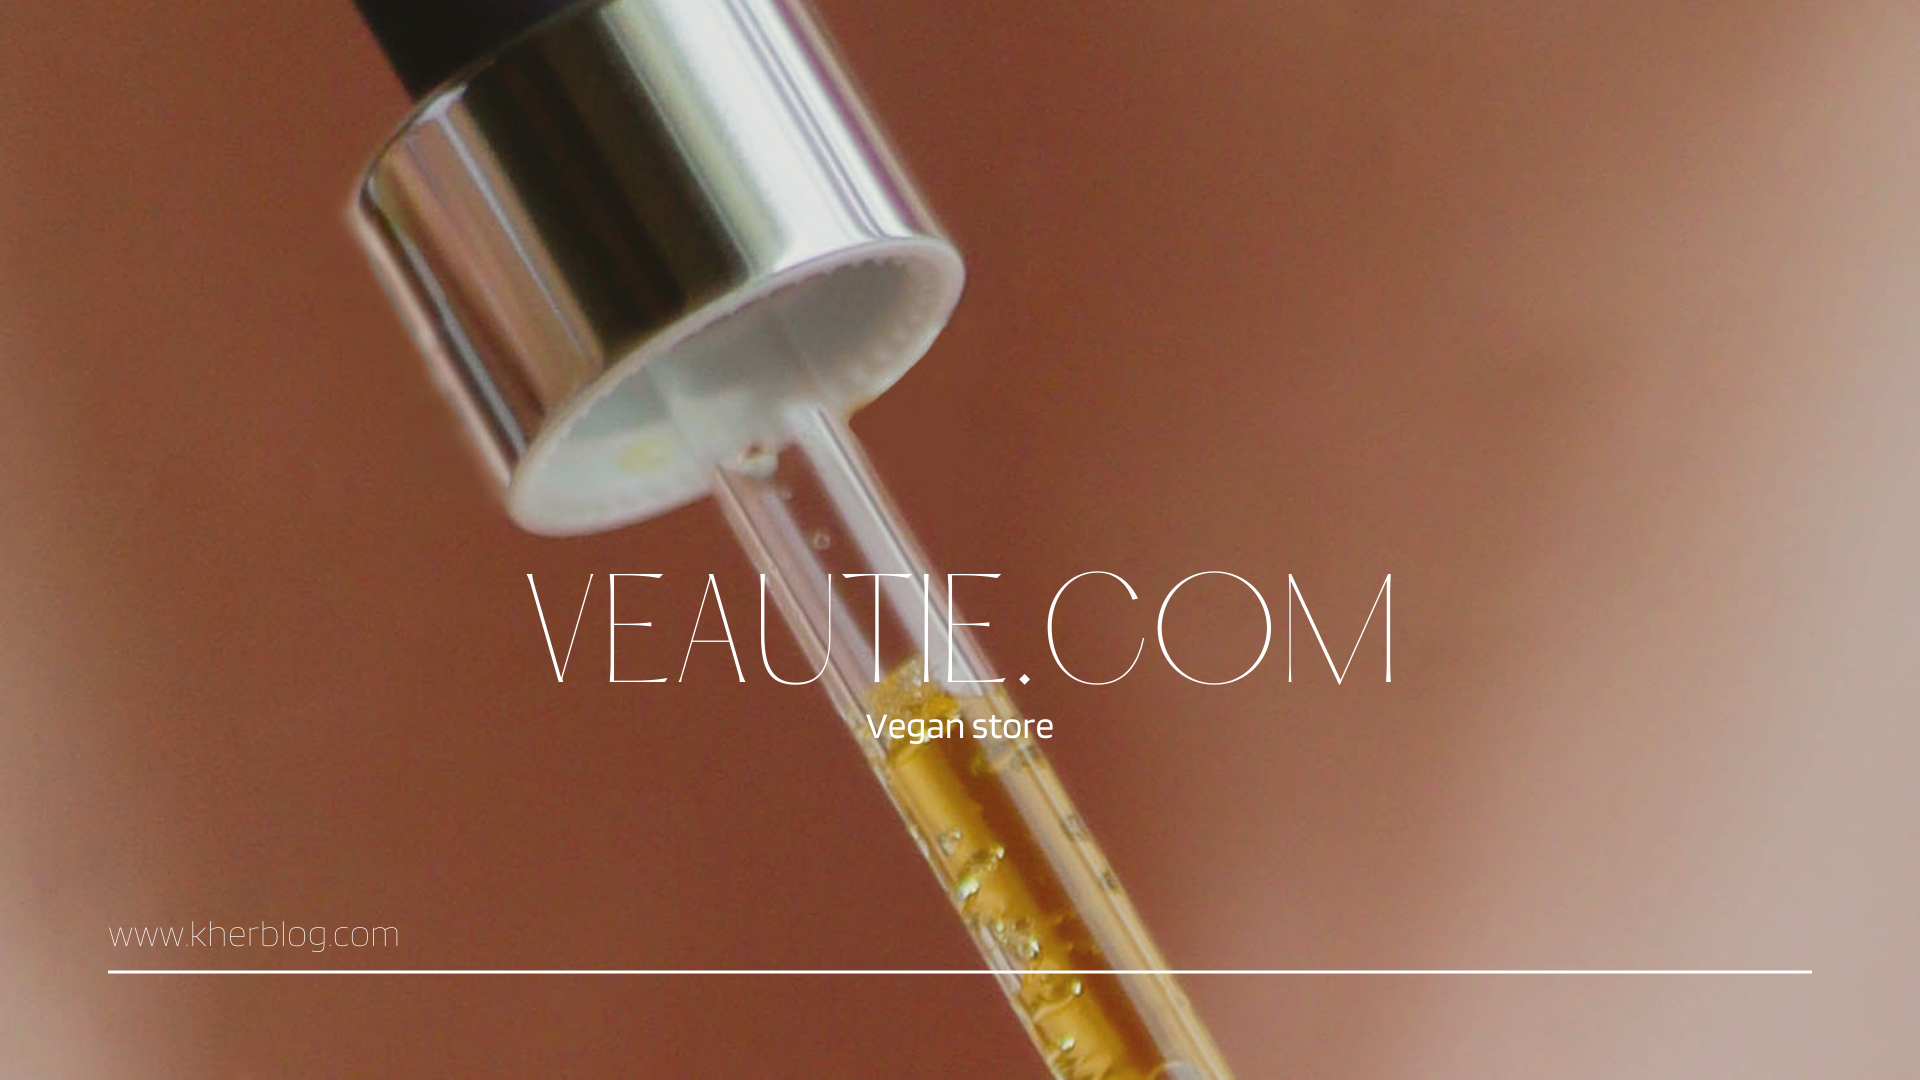 Veautie.com vegan beauty & skincare store